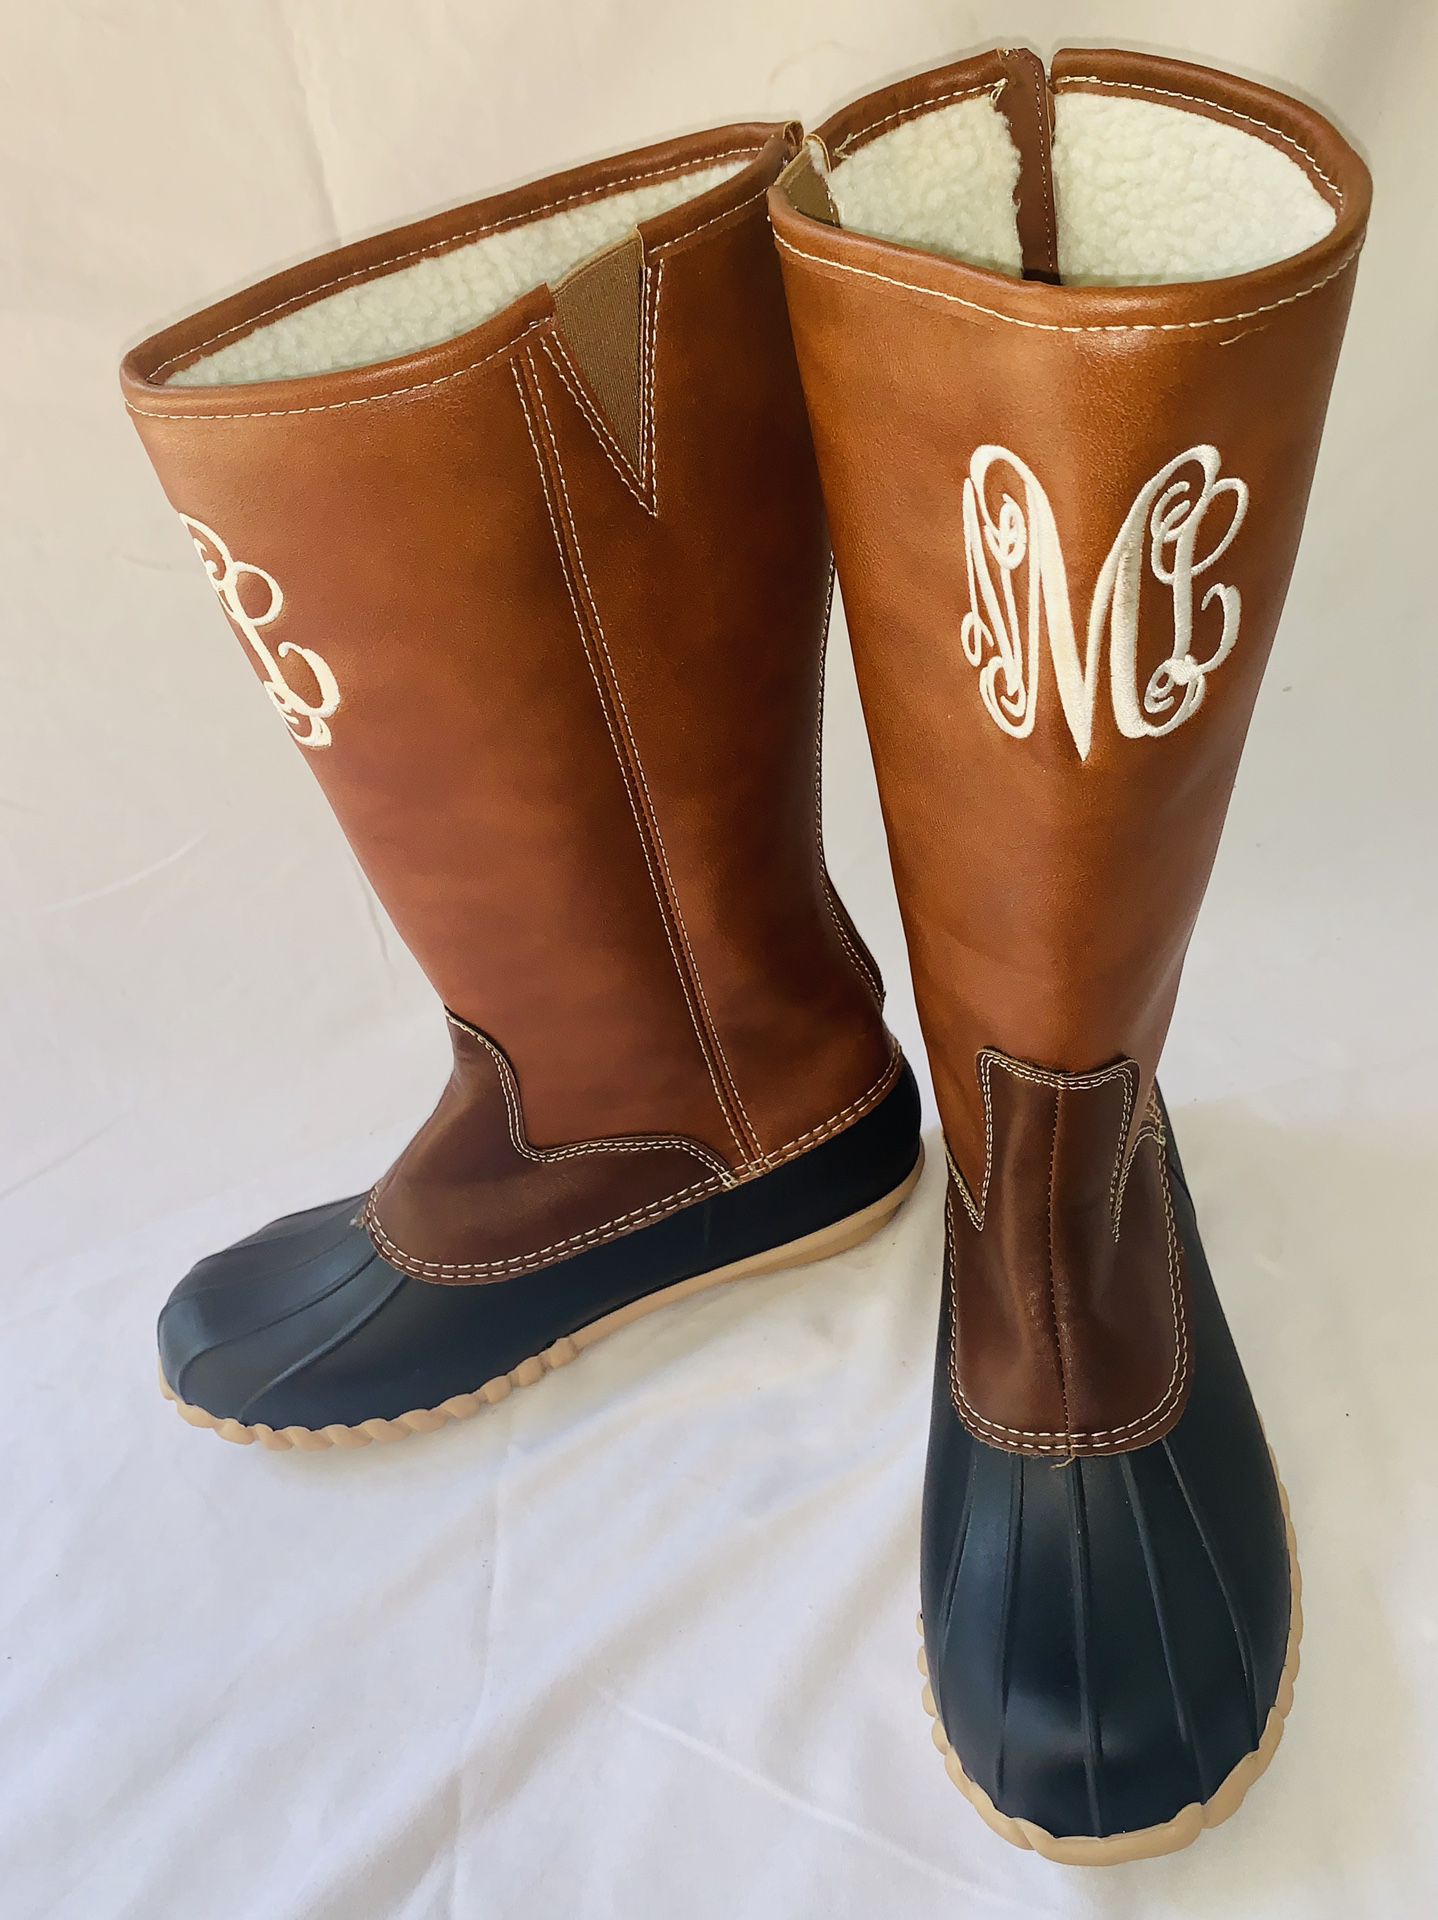 Women’s Rain Boots Duck Boots Waterproof Insulated, Monogramed Brown/ Black sz 5